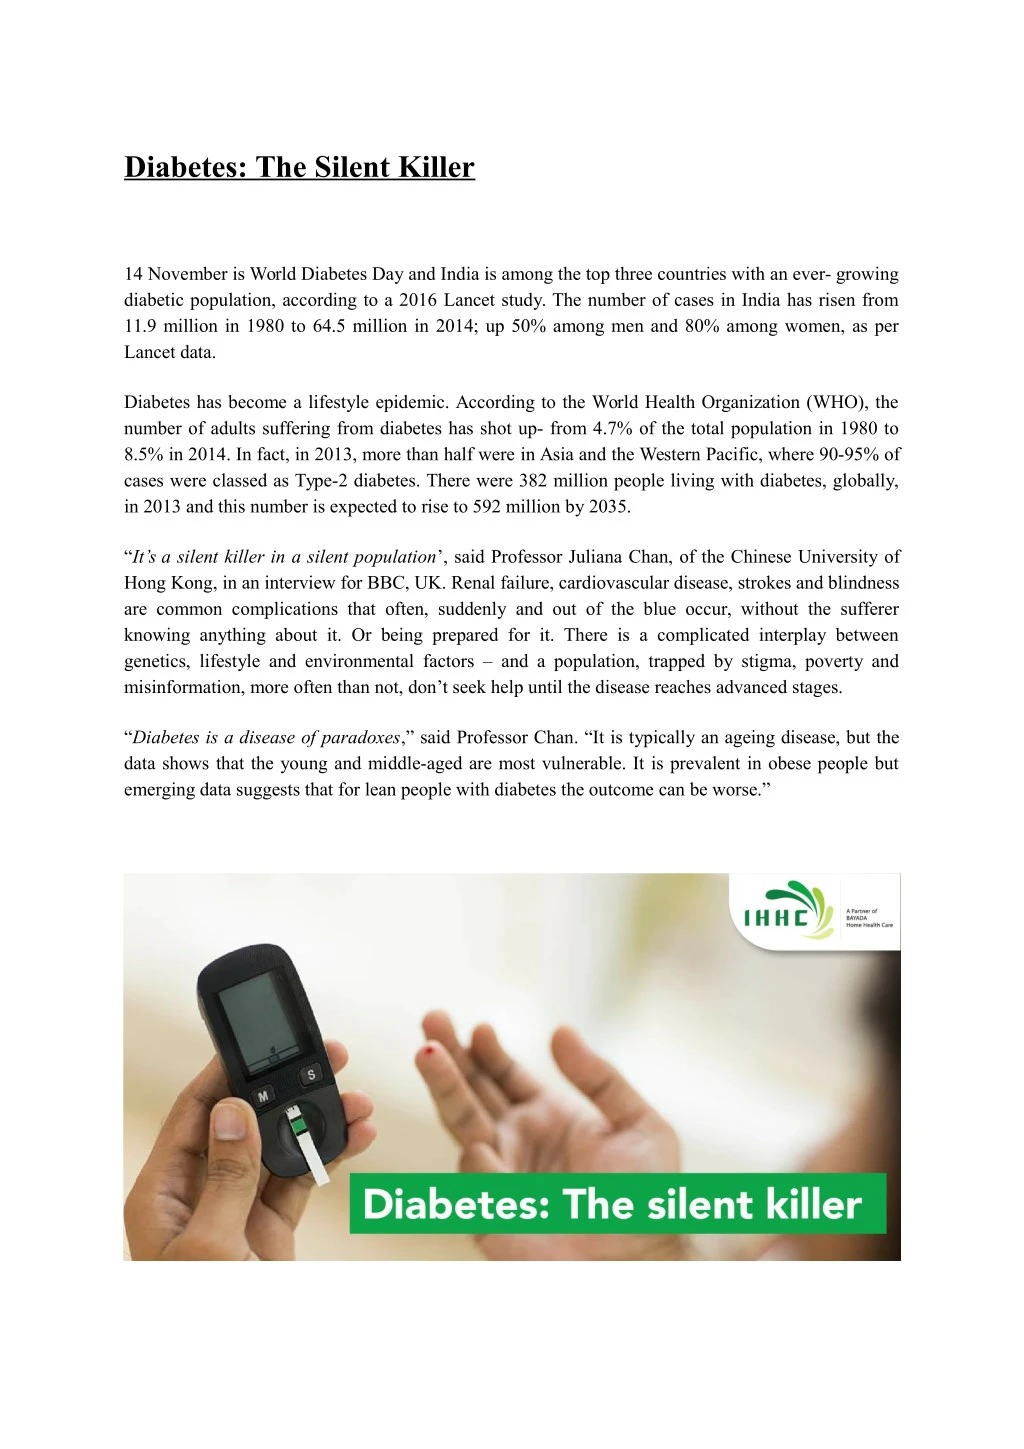 diabetes the silent killer